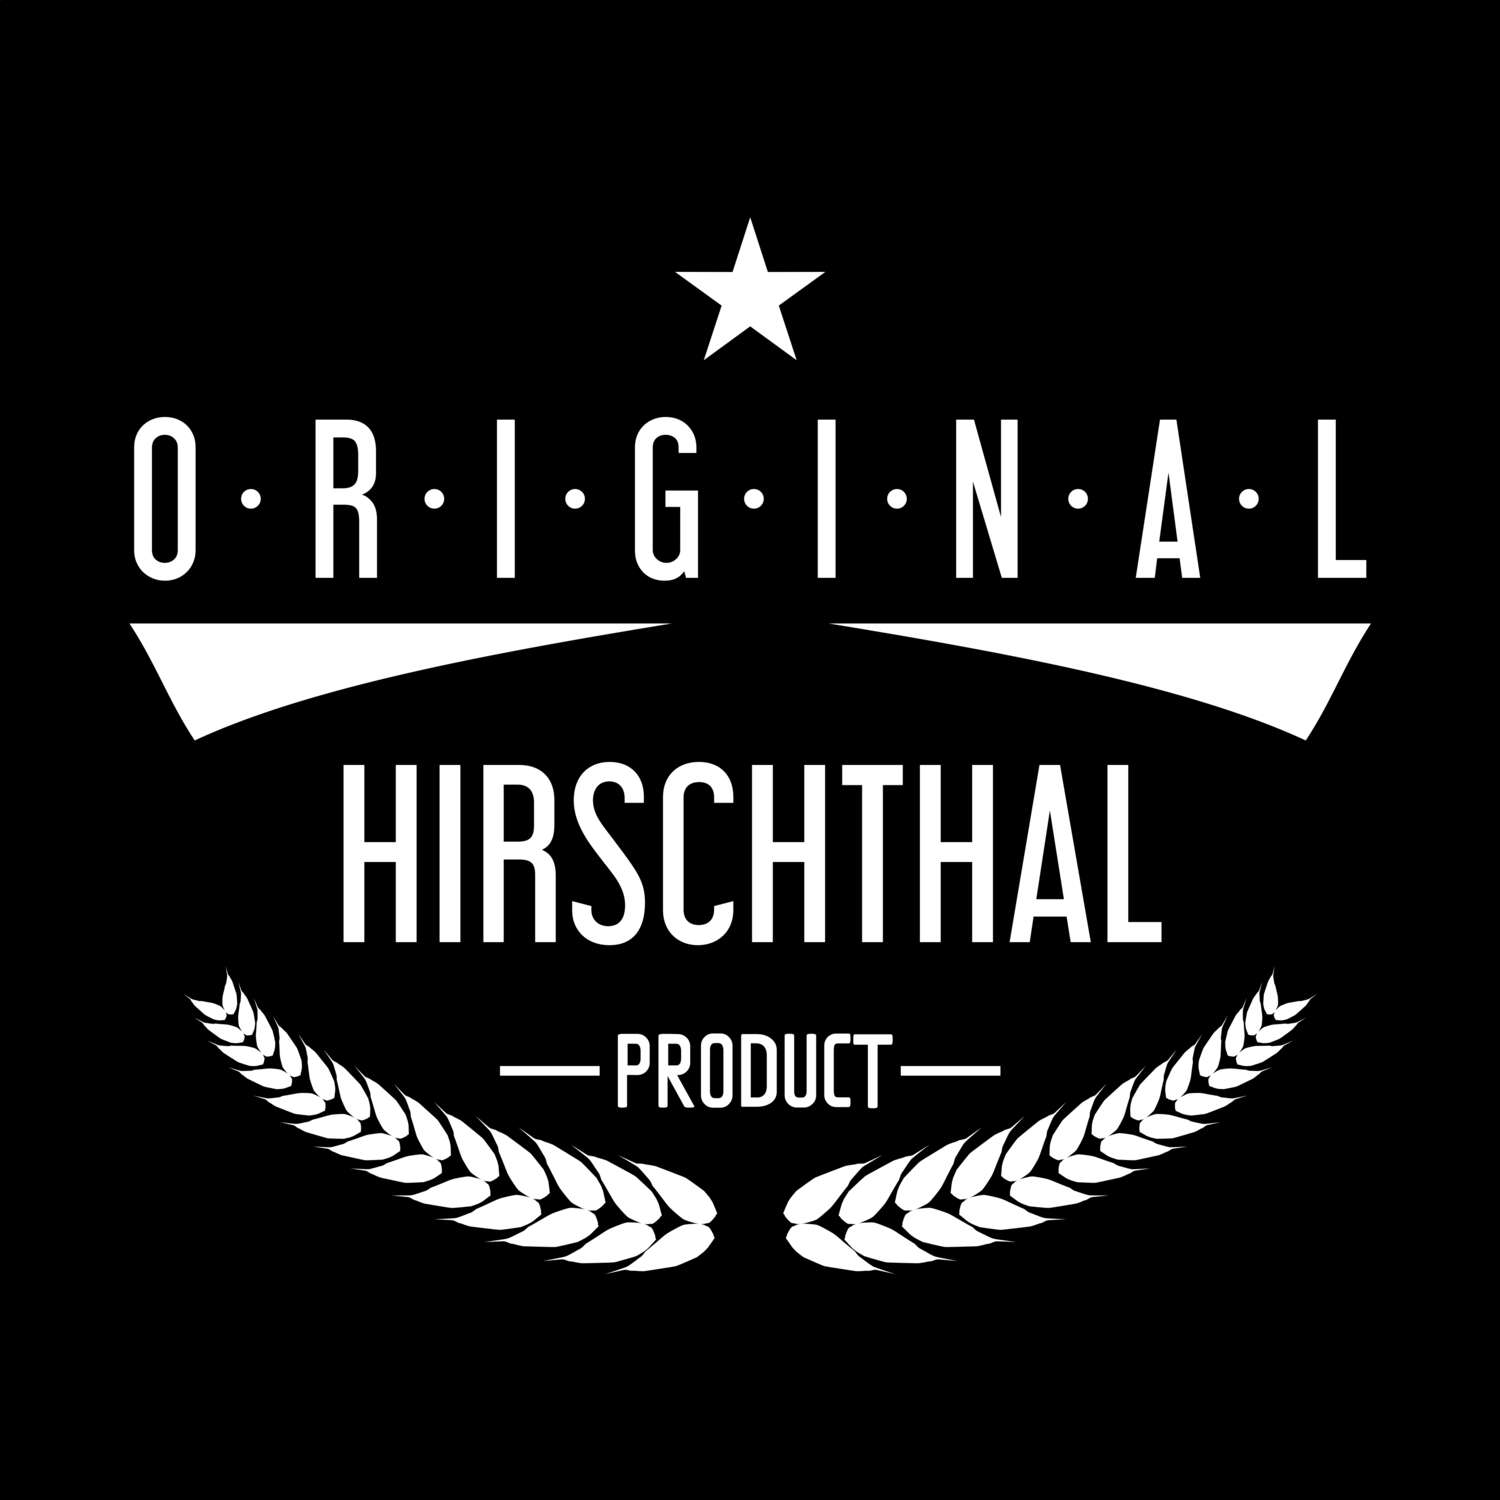 Hirschthal T-Shirt »Original Product«